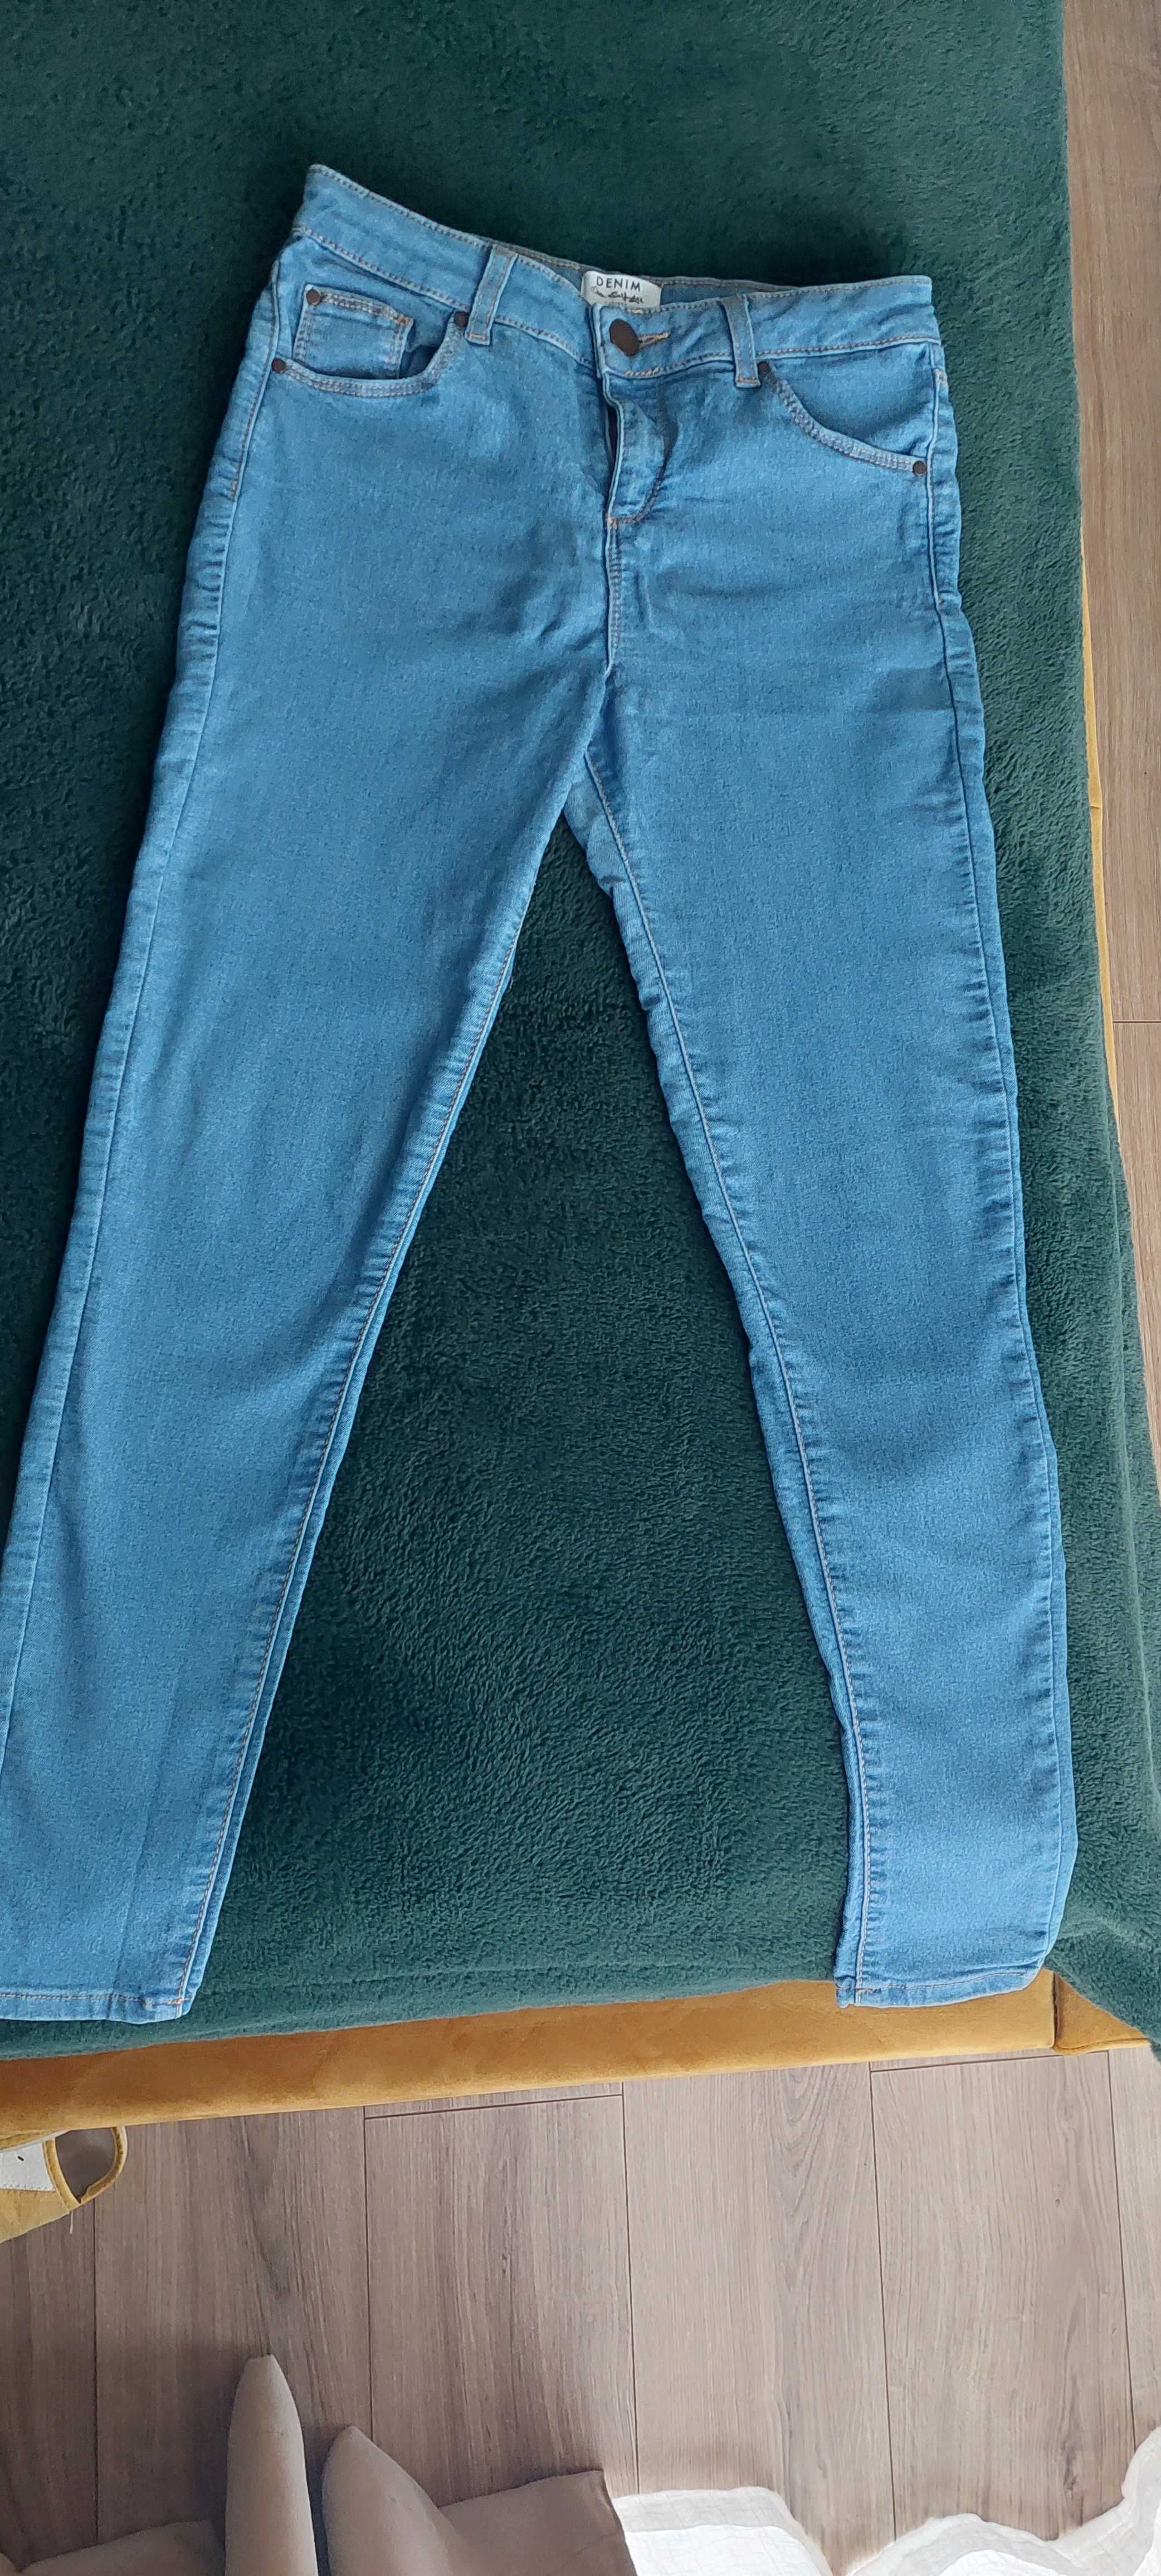 Dopasowane jeansy legginsy 36 S